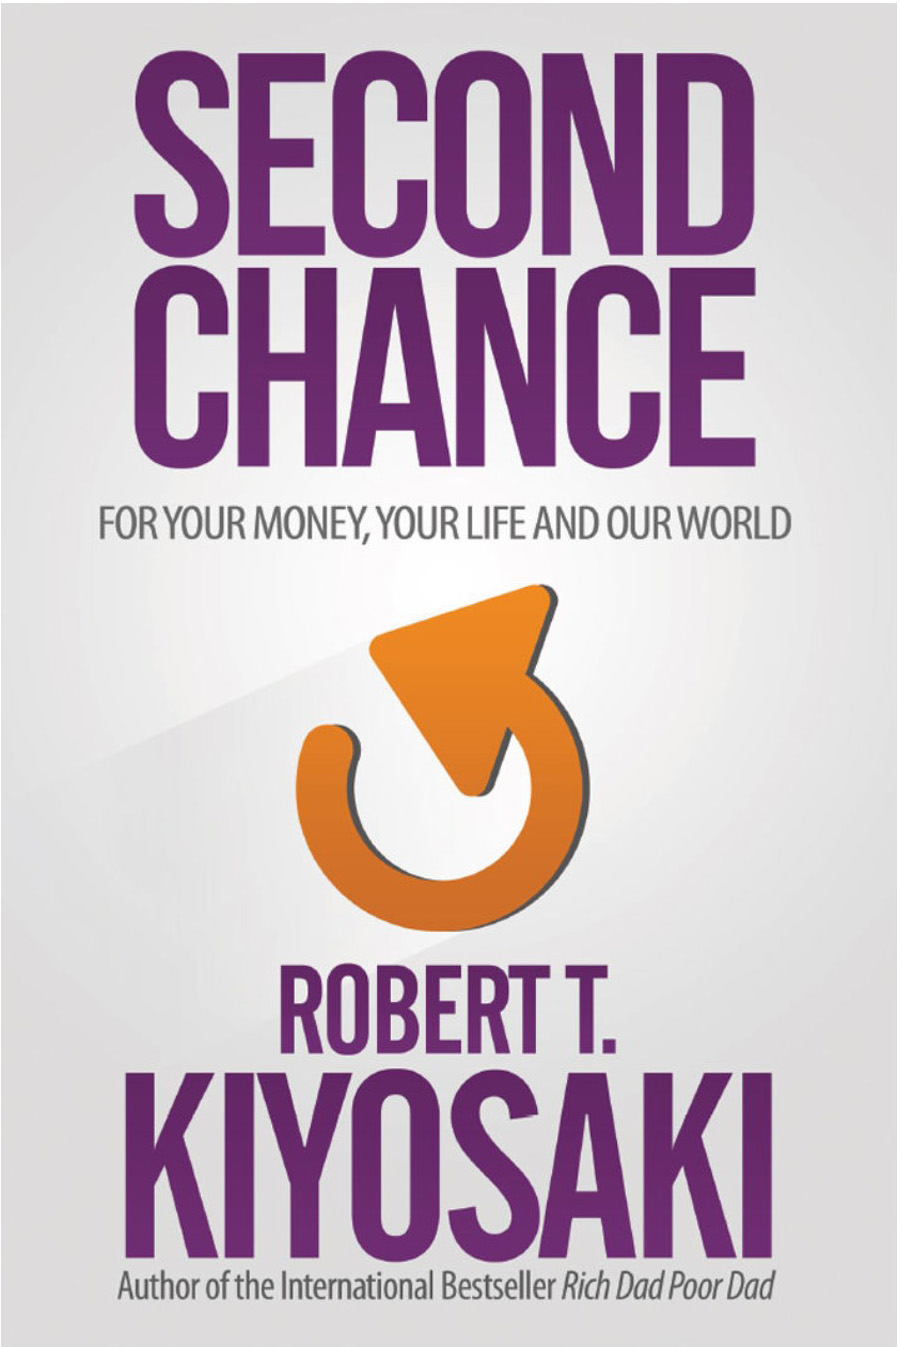 Second Chance | Robert T. Kiyosaki